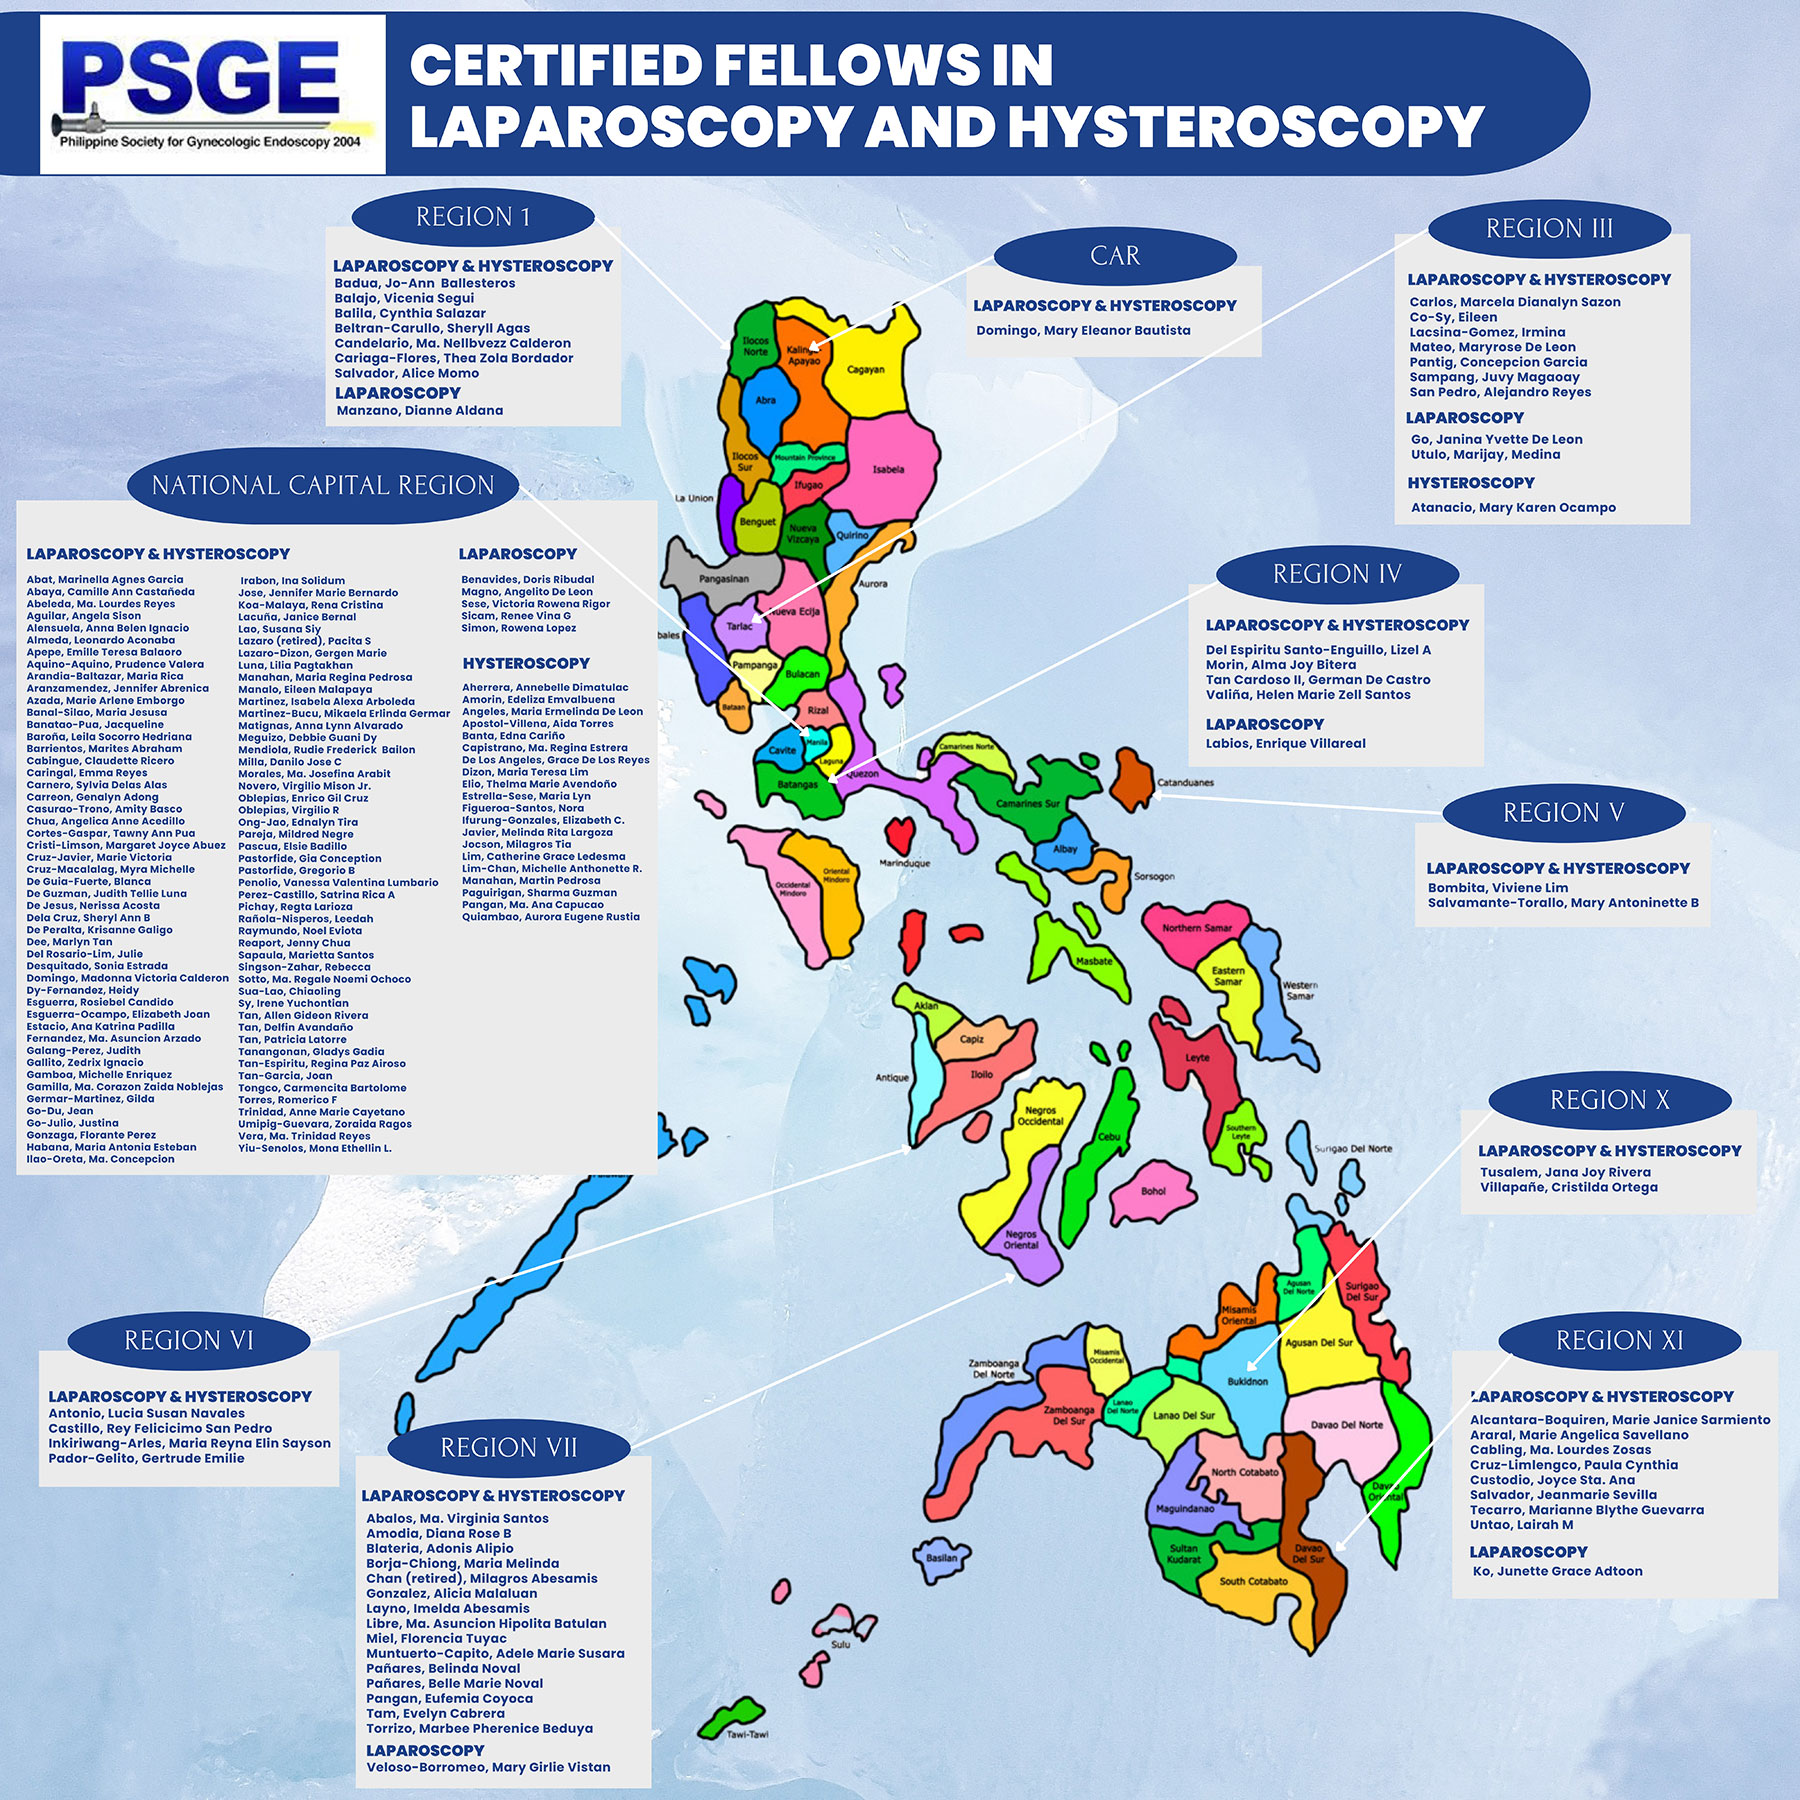 PSGE Fellows by Region